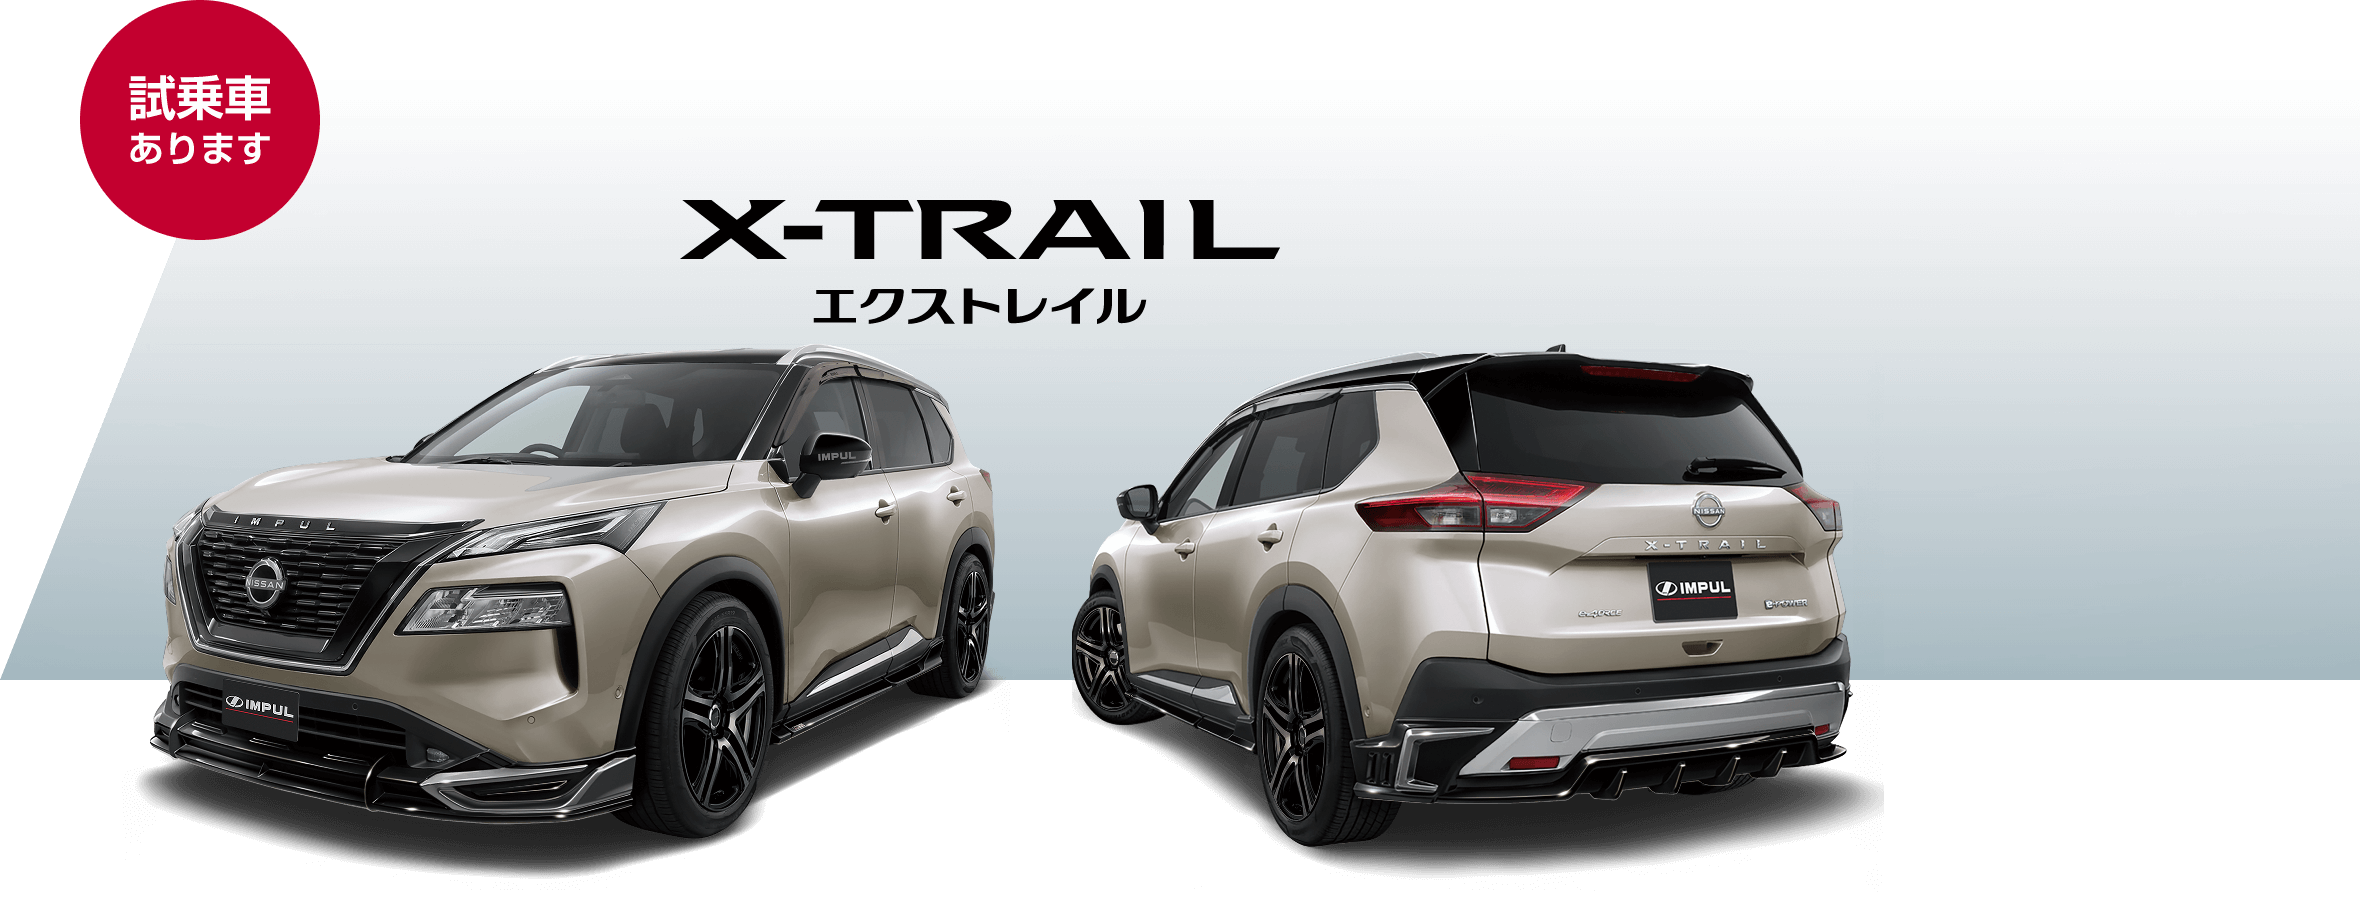 X-TRAIL エクストレイル 